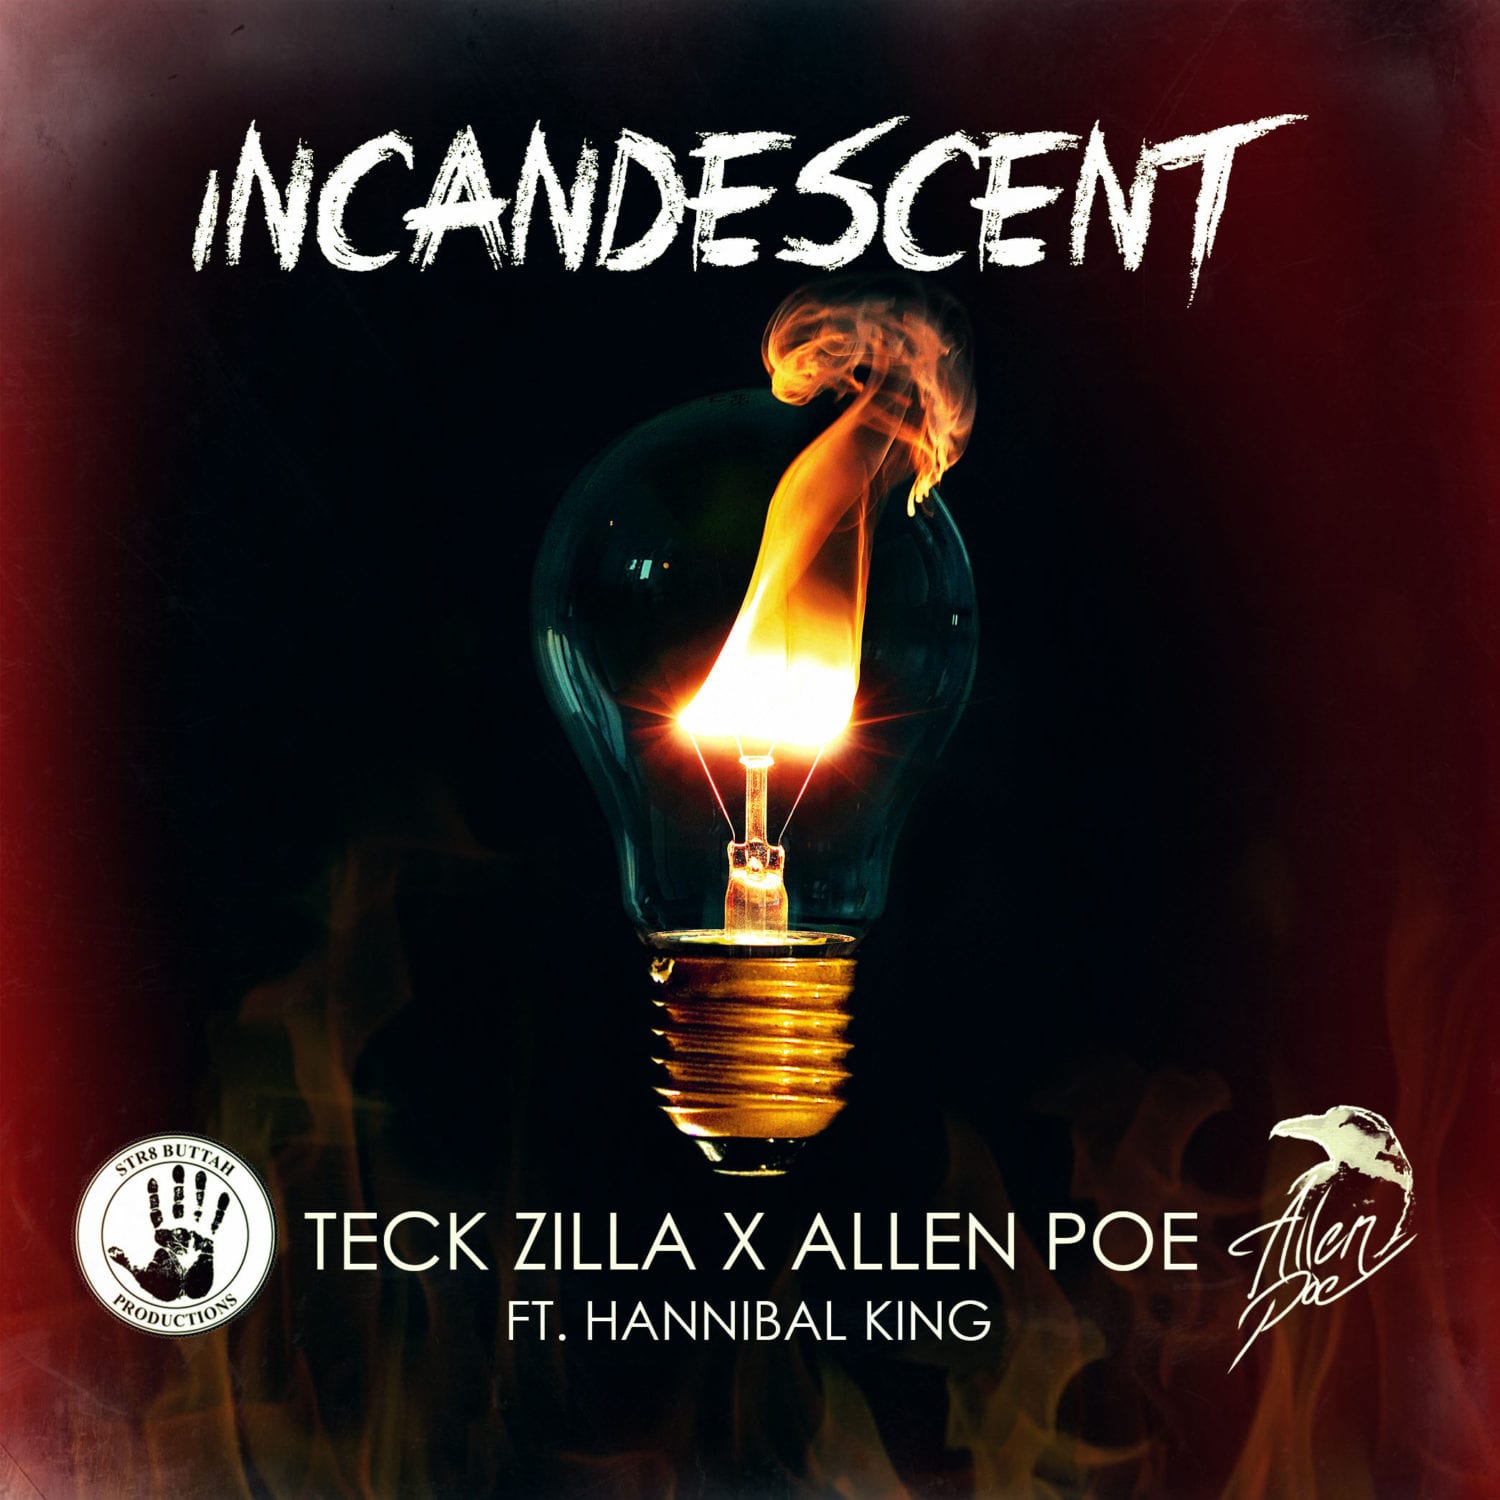 Teck Zilla & Allen Poe Drops Latest Single - "Incandescent" Ft. Hannibal King